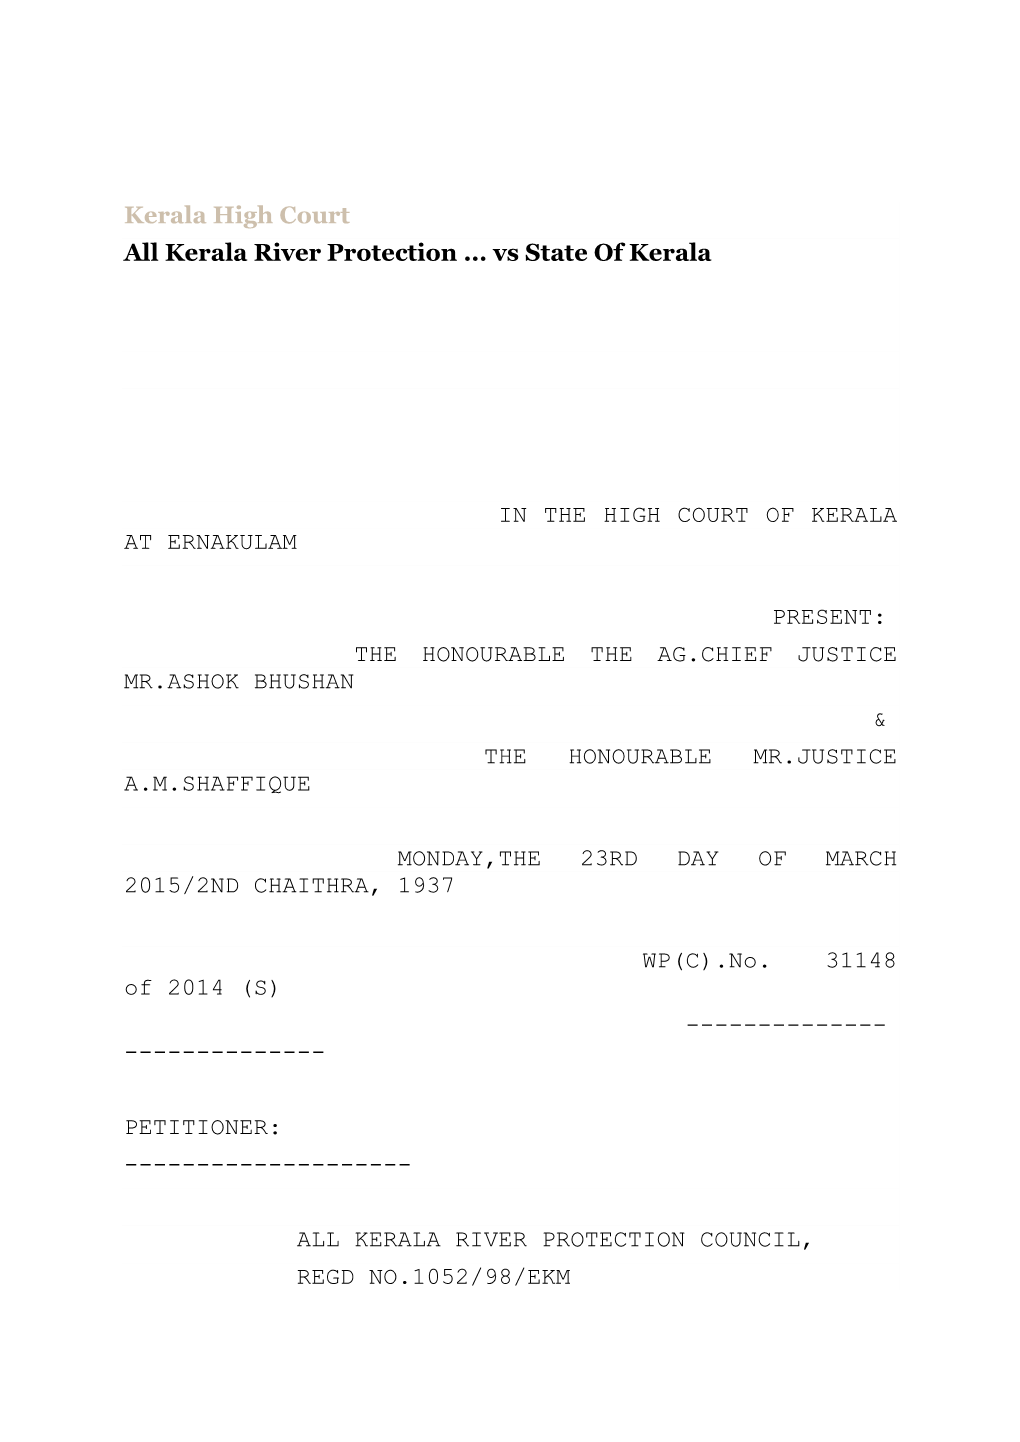 Kerala High Court All Kerala River Protection ... Vs State of Kerala